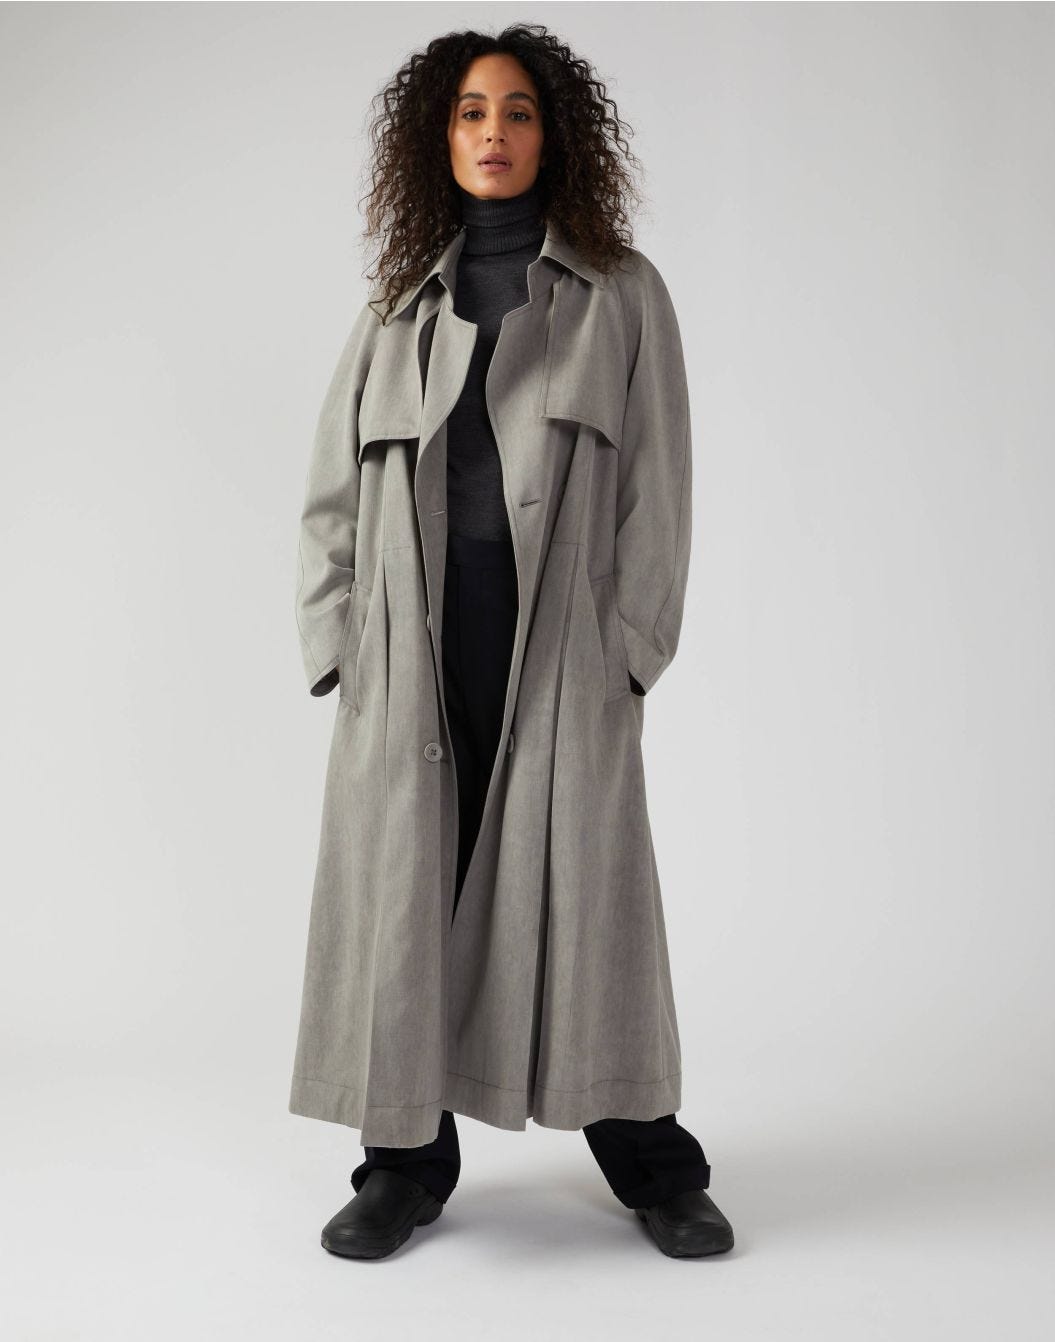 Grey belted trench coat in wool gabardine